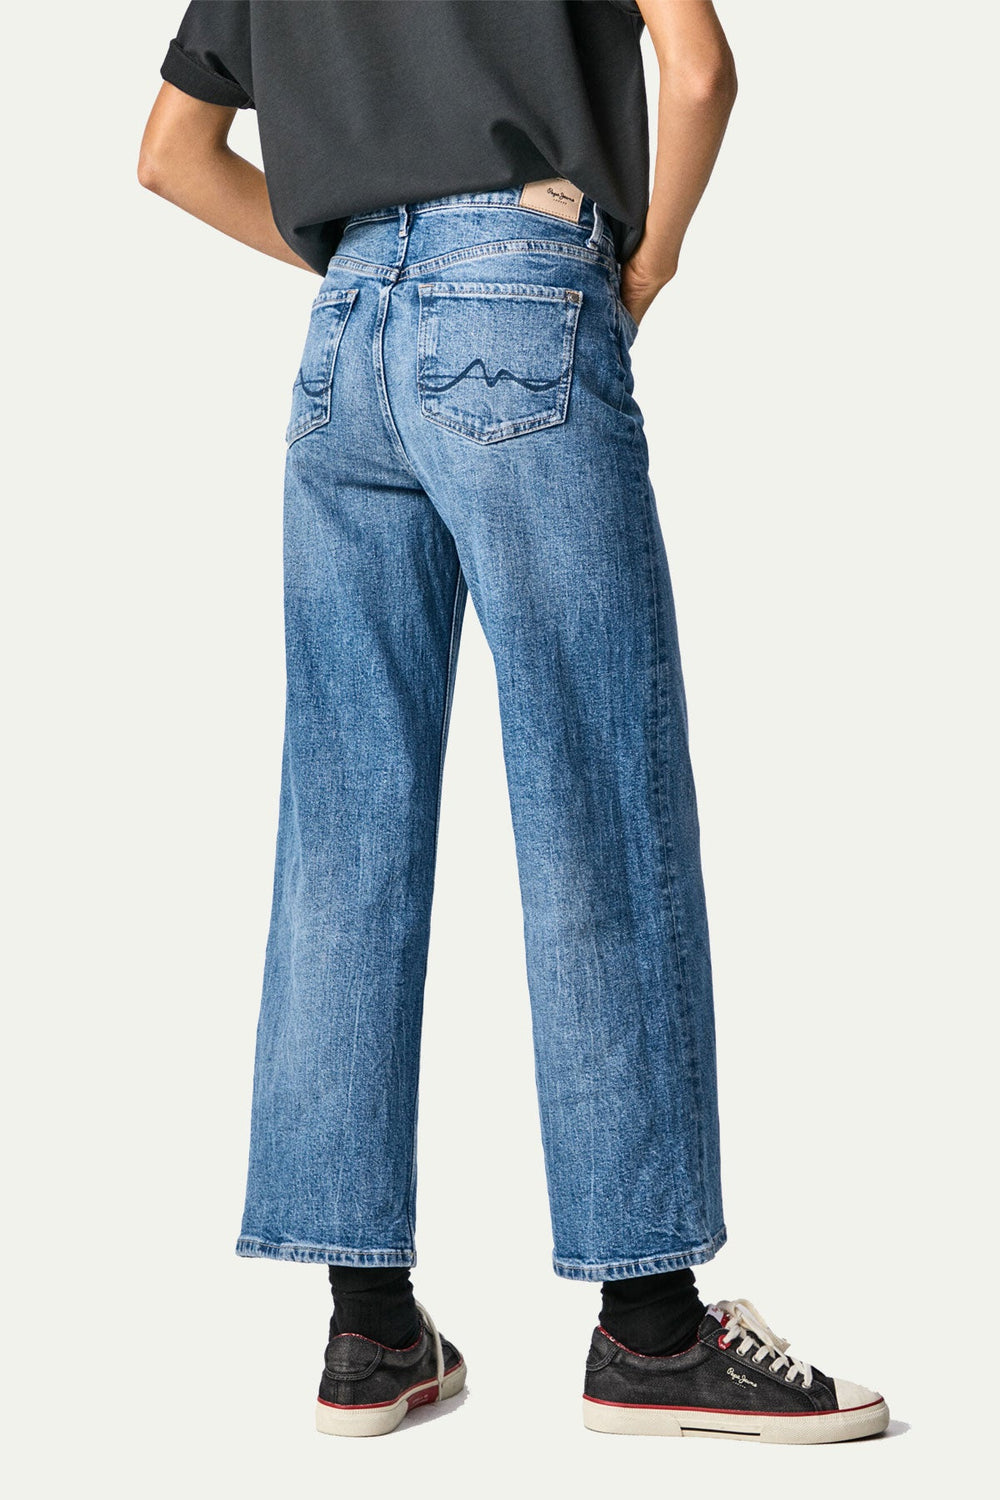 LEXA SKY HIGH ג'ינס - Pepe Jeans